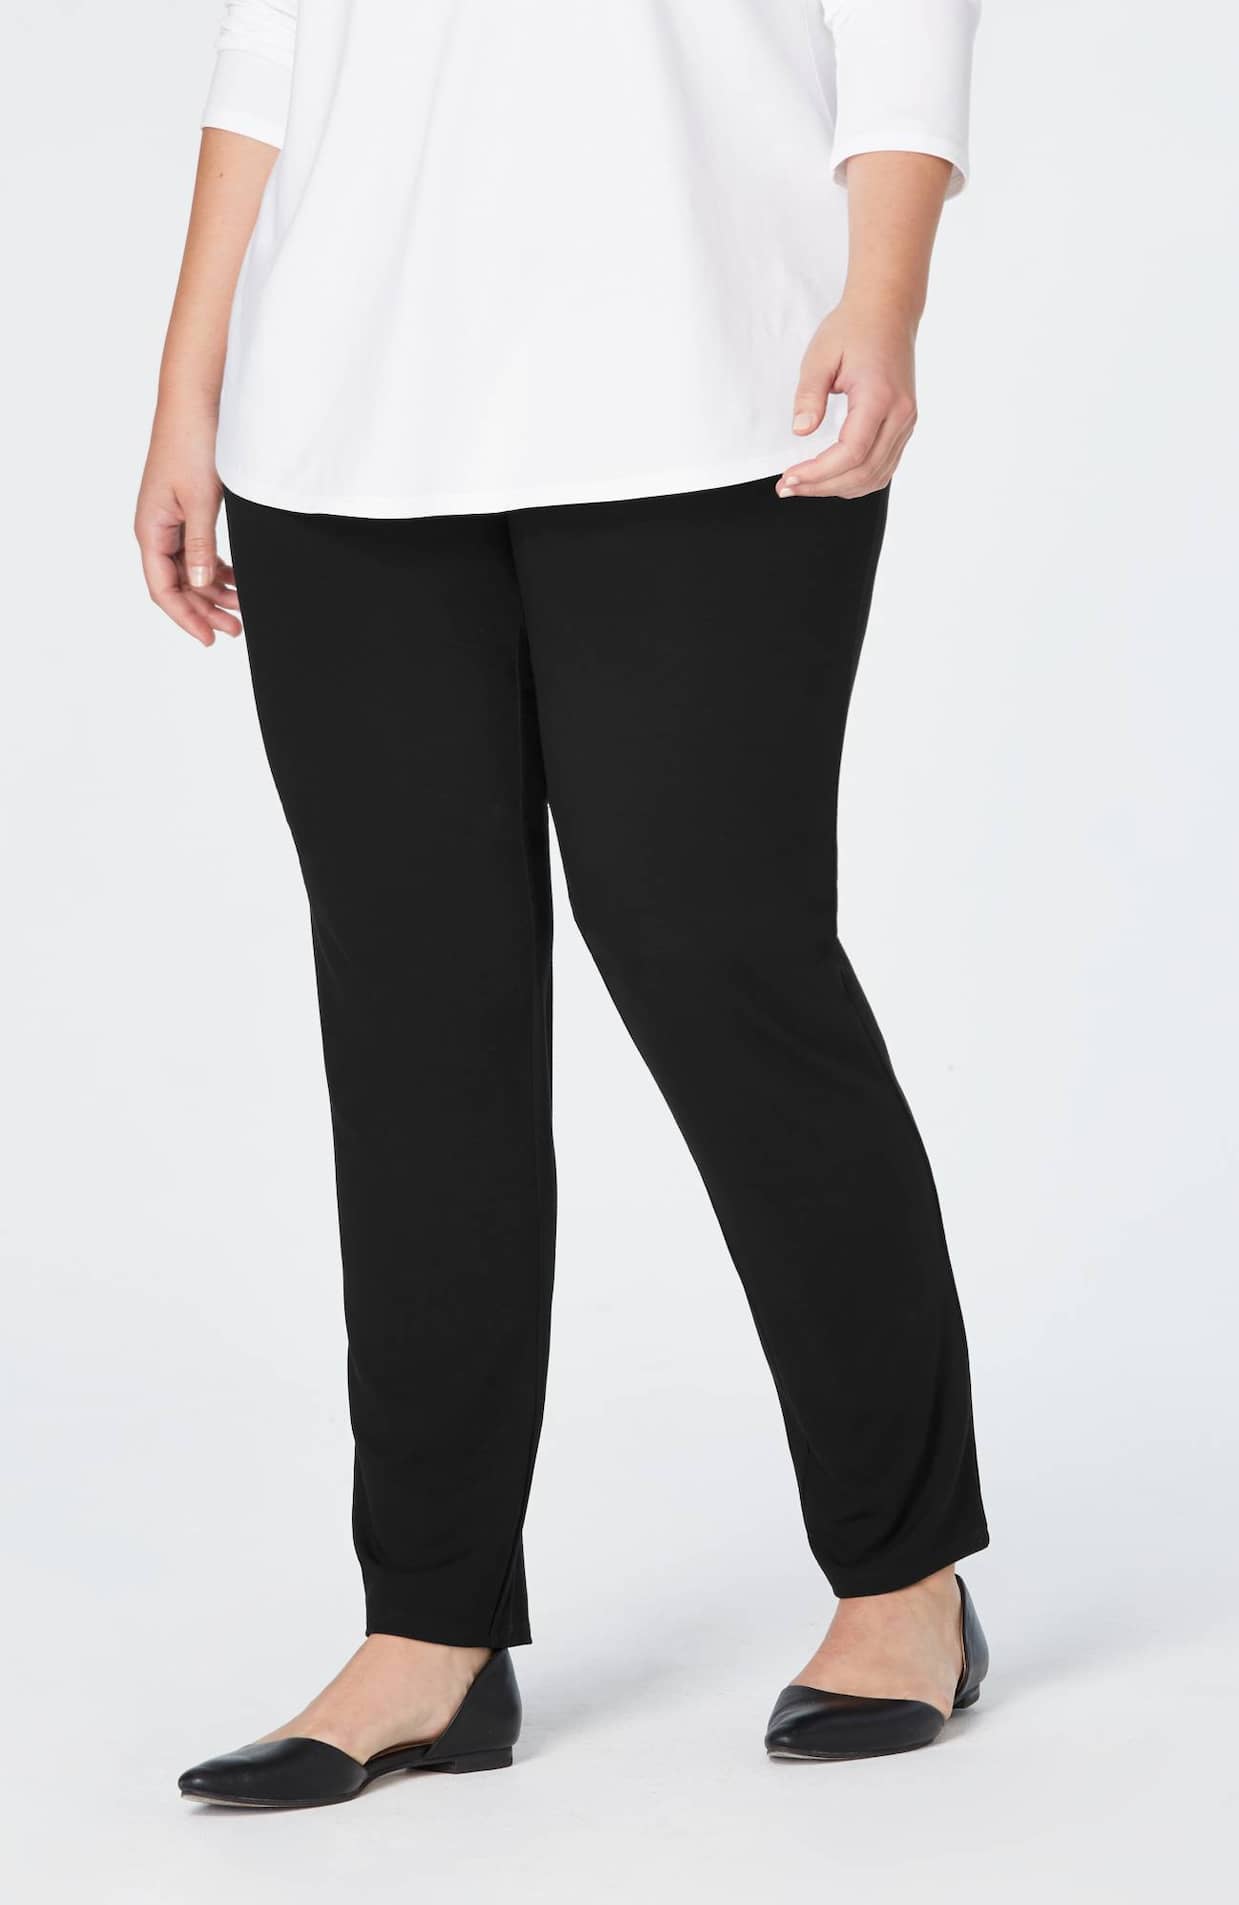 J. Jill Slim Ankle Black Velour Pants Small Wearever Collection Soft  Leggings S